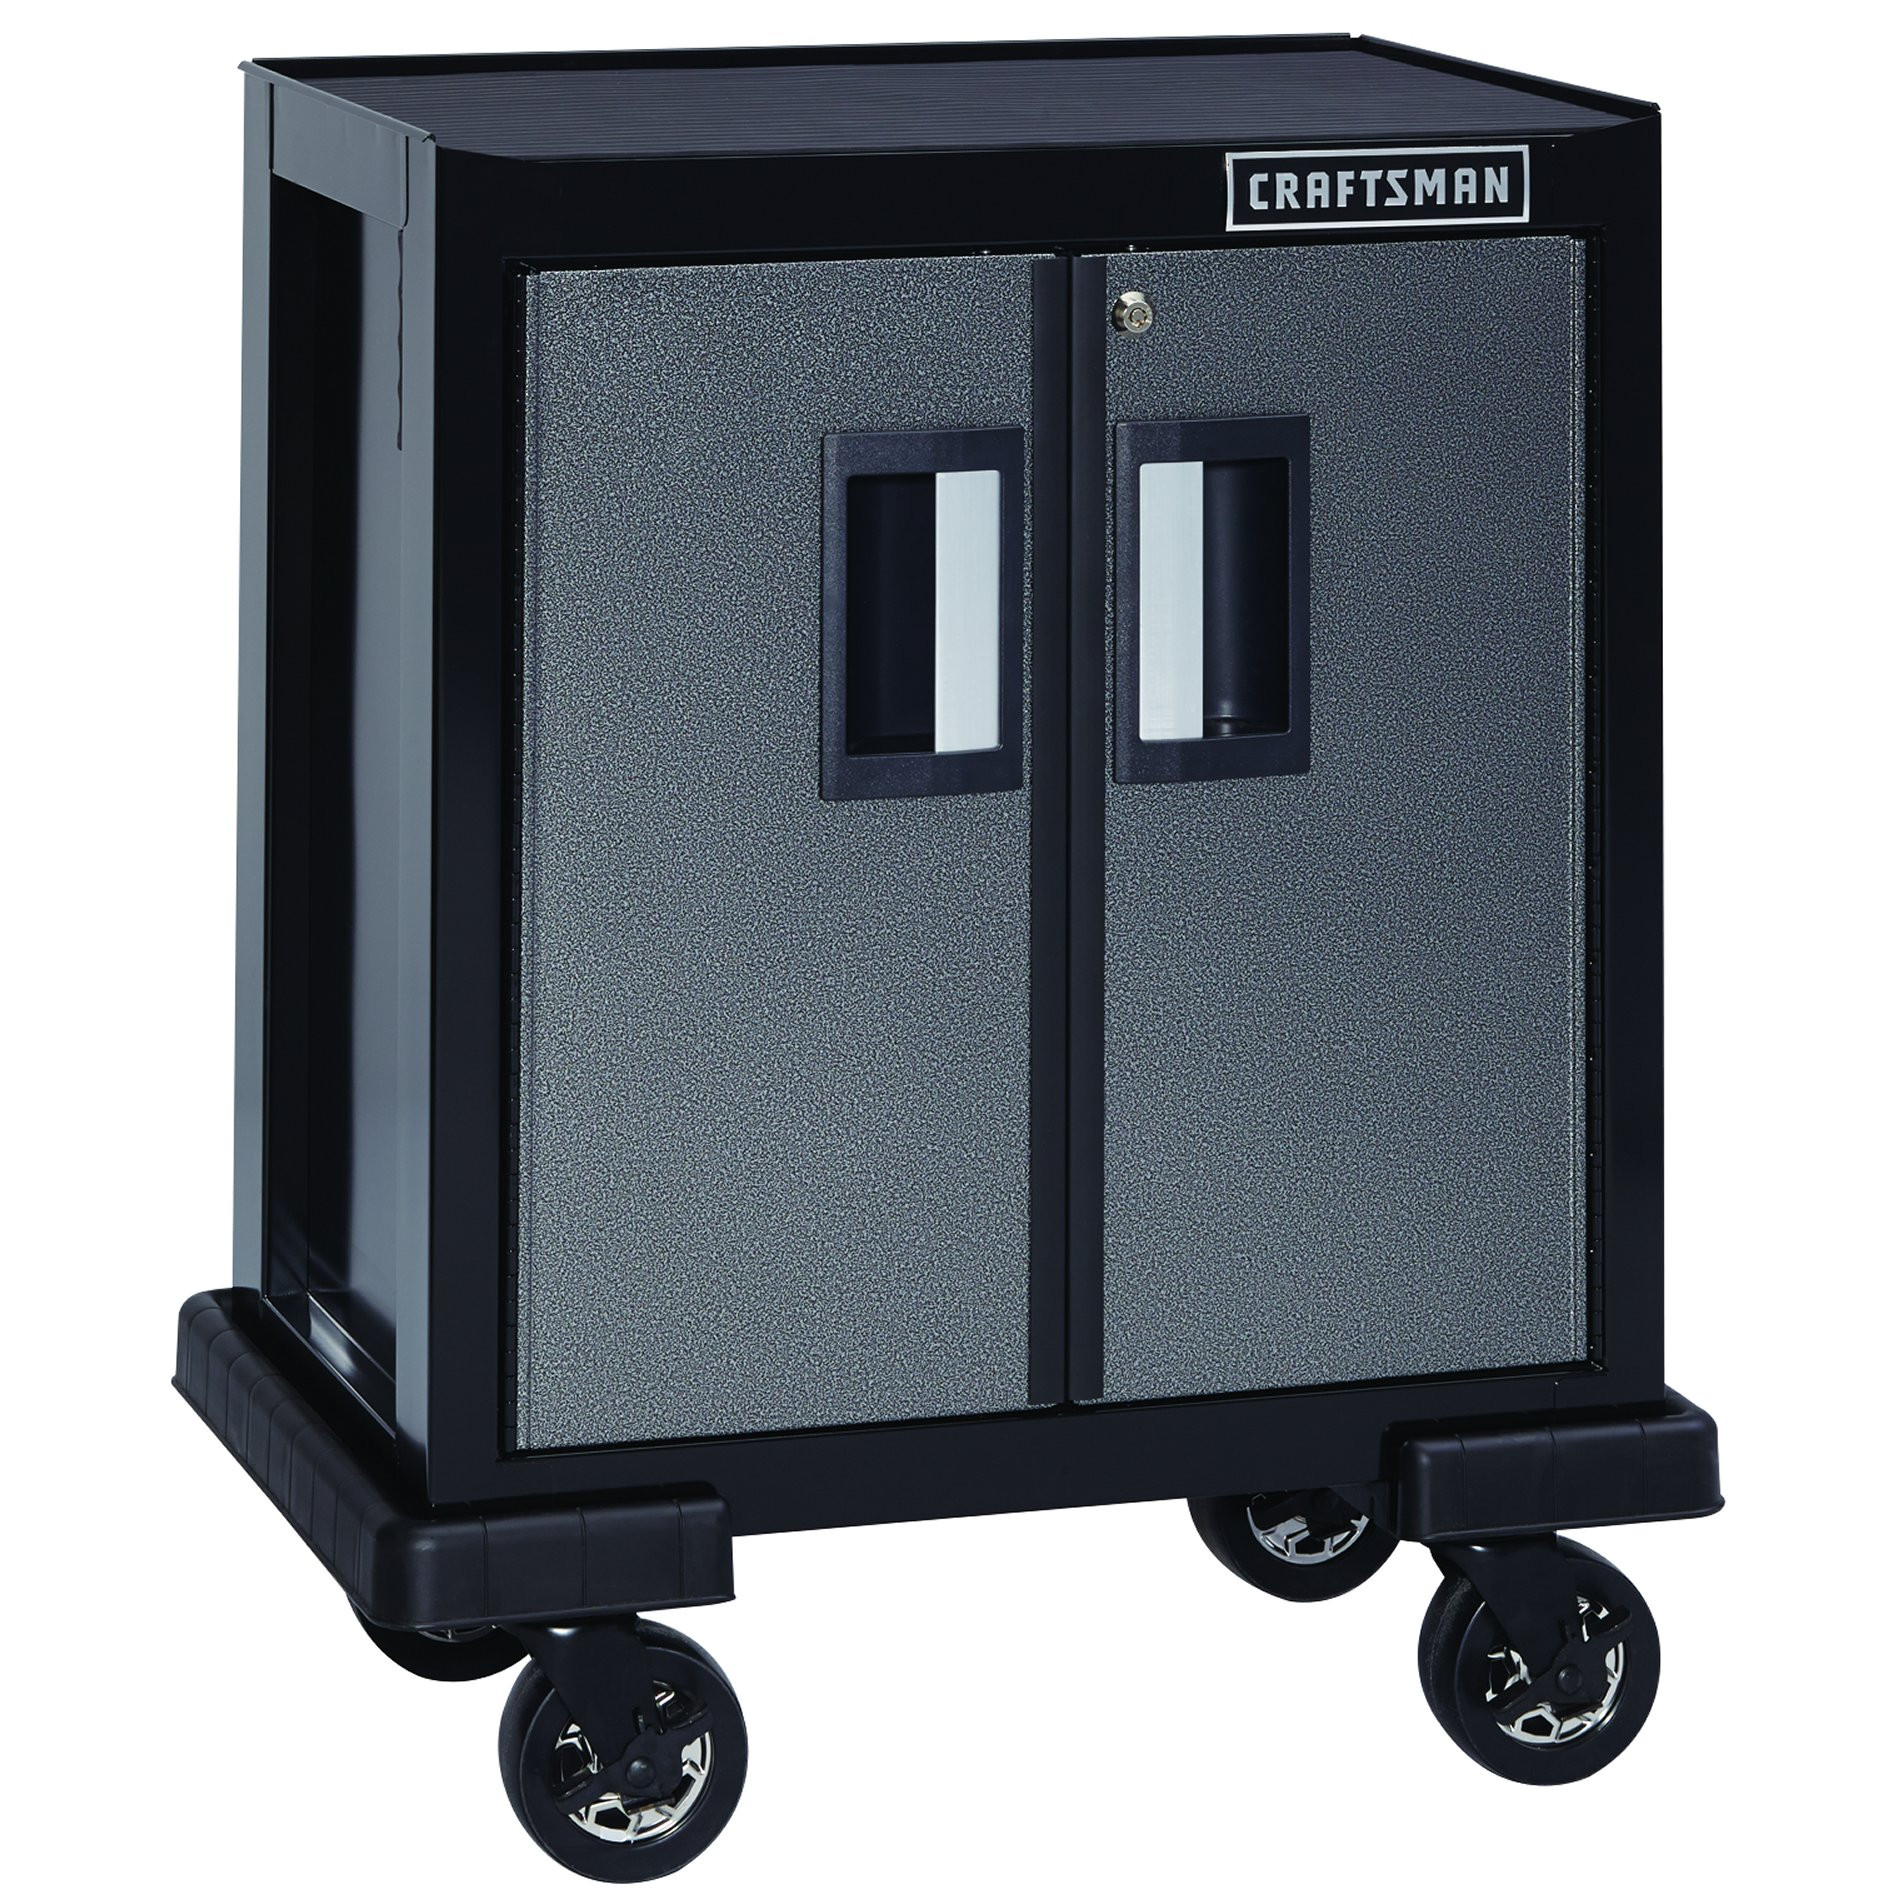 Sears Garage Organization
 Craftsman Premium Heavy Duty 2 Door Base Cabinet Tools